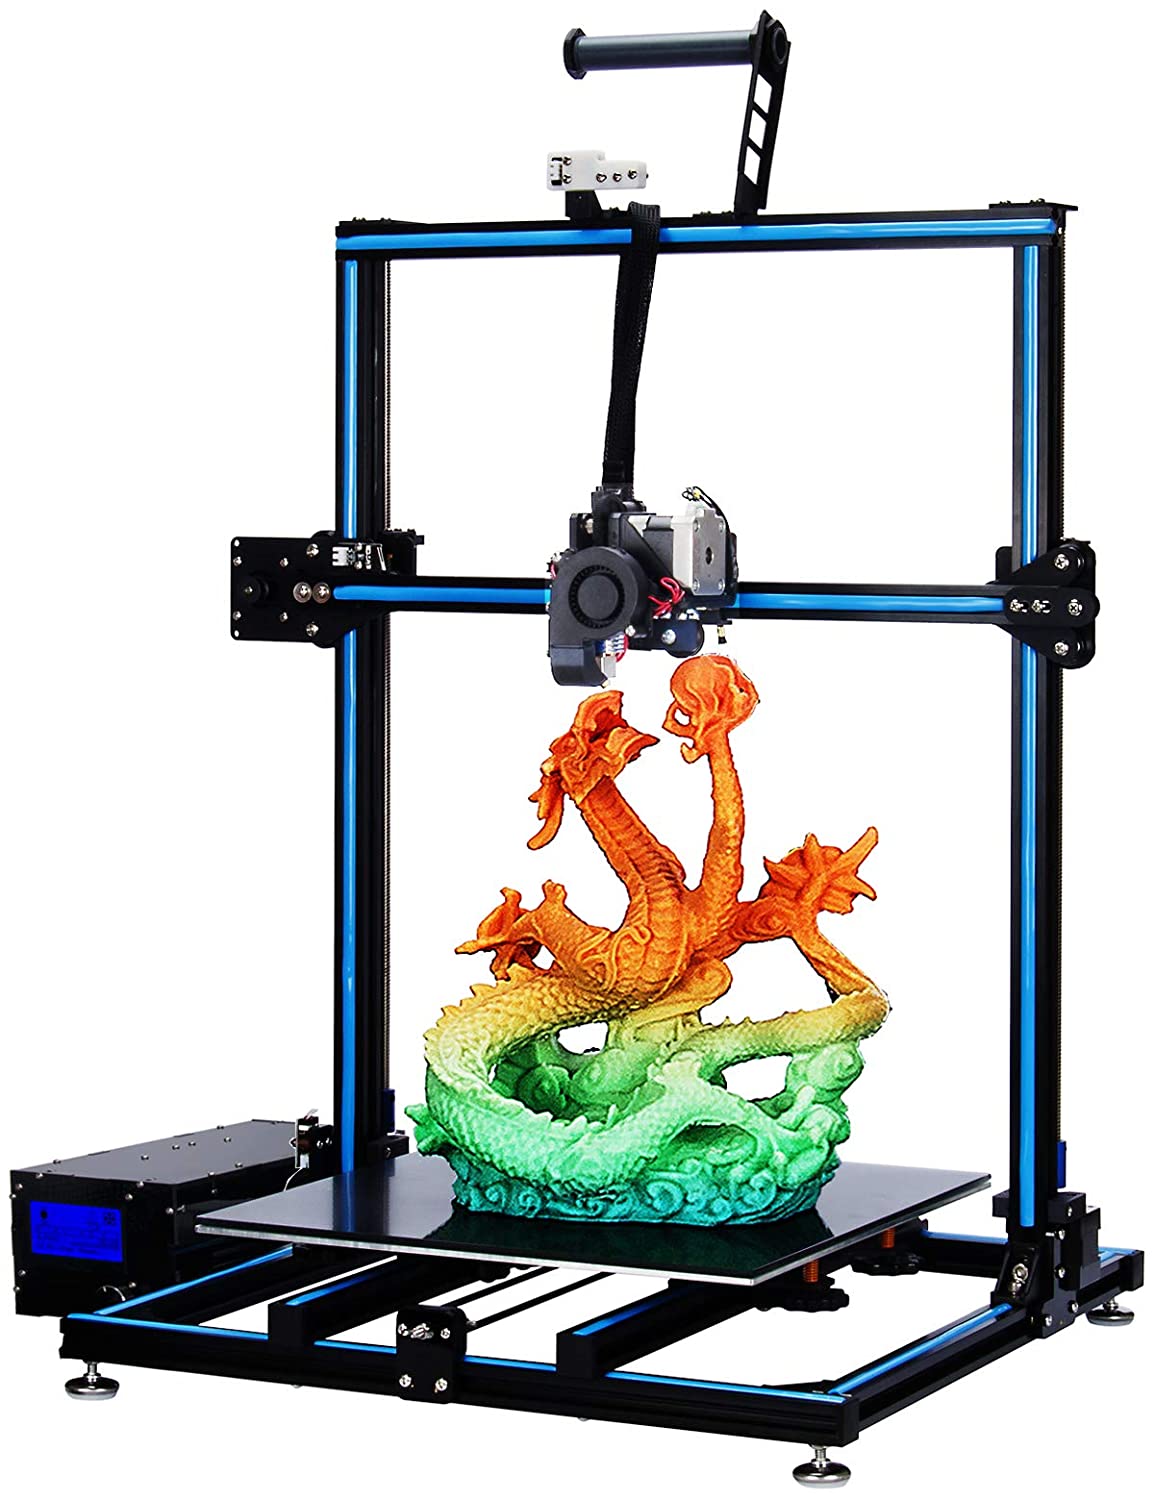 ADIMLab Gantry Pro 3D Printer